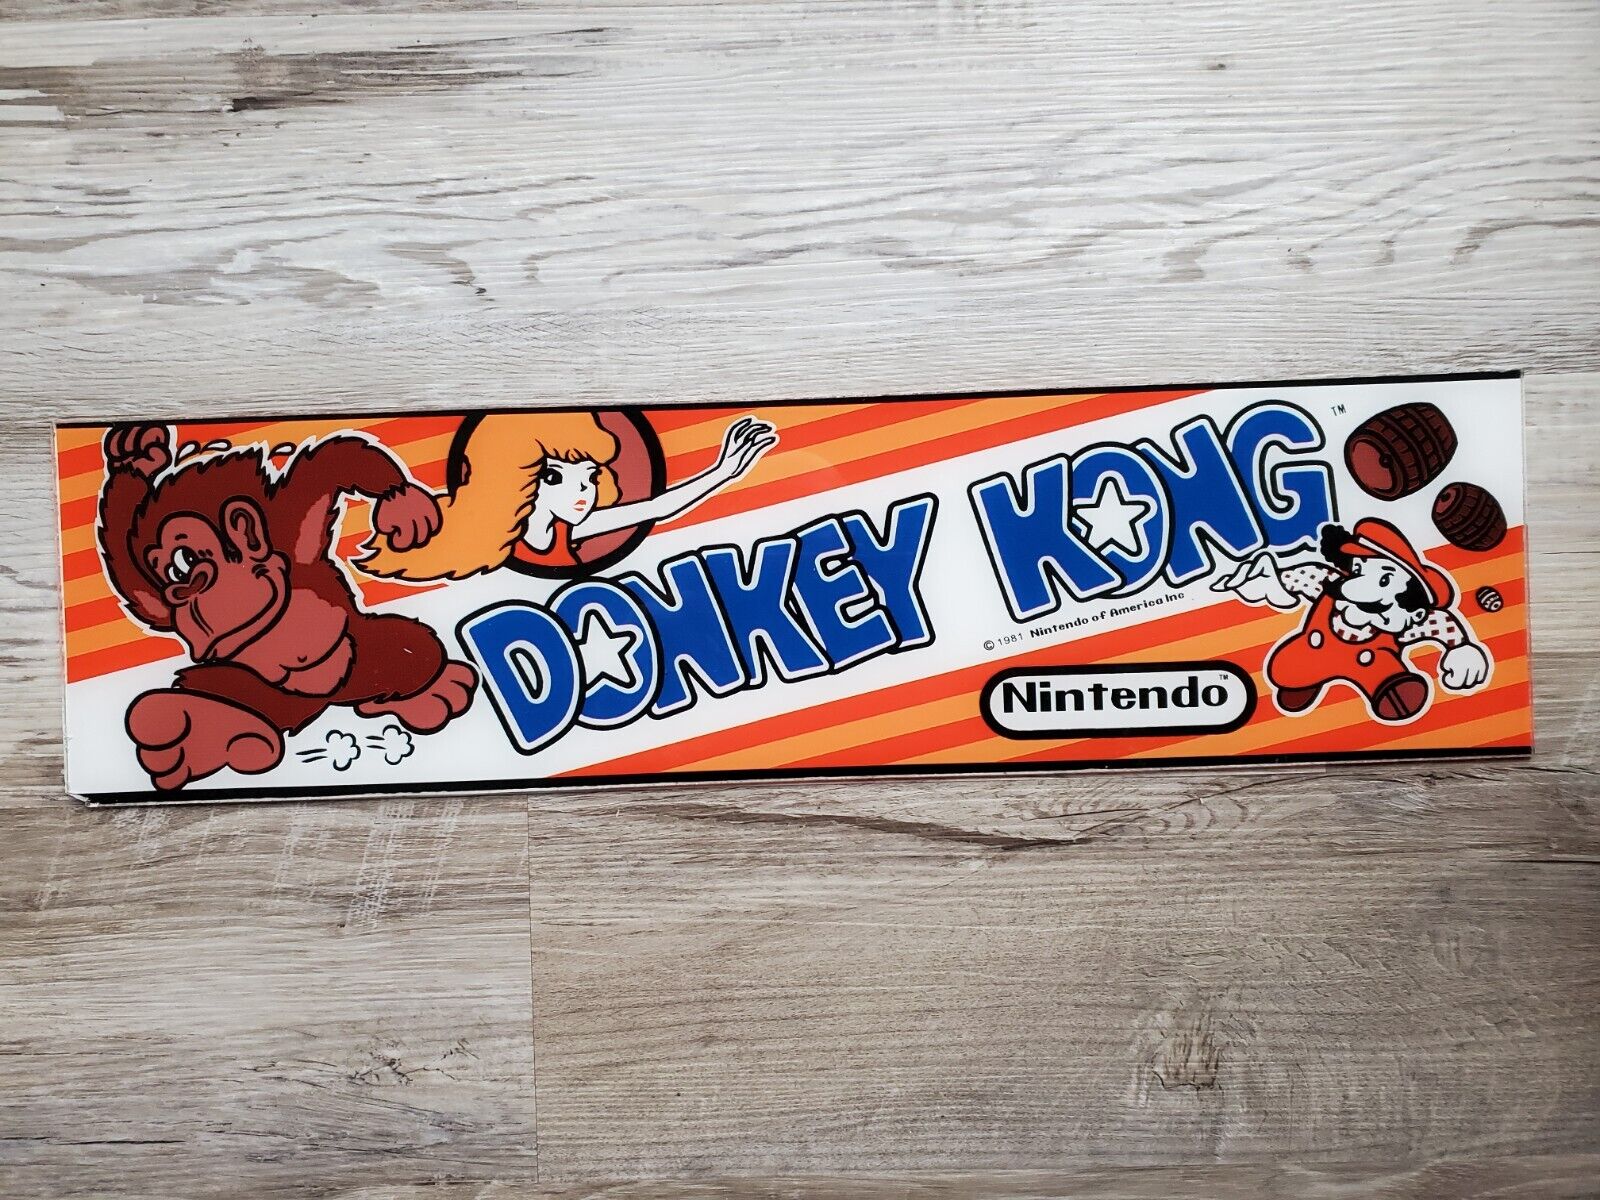 Nintendo Donkey Kong Arcade Marquee